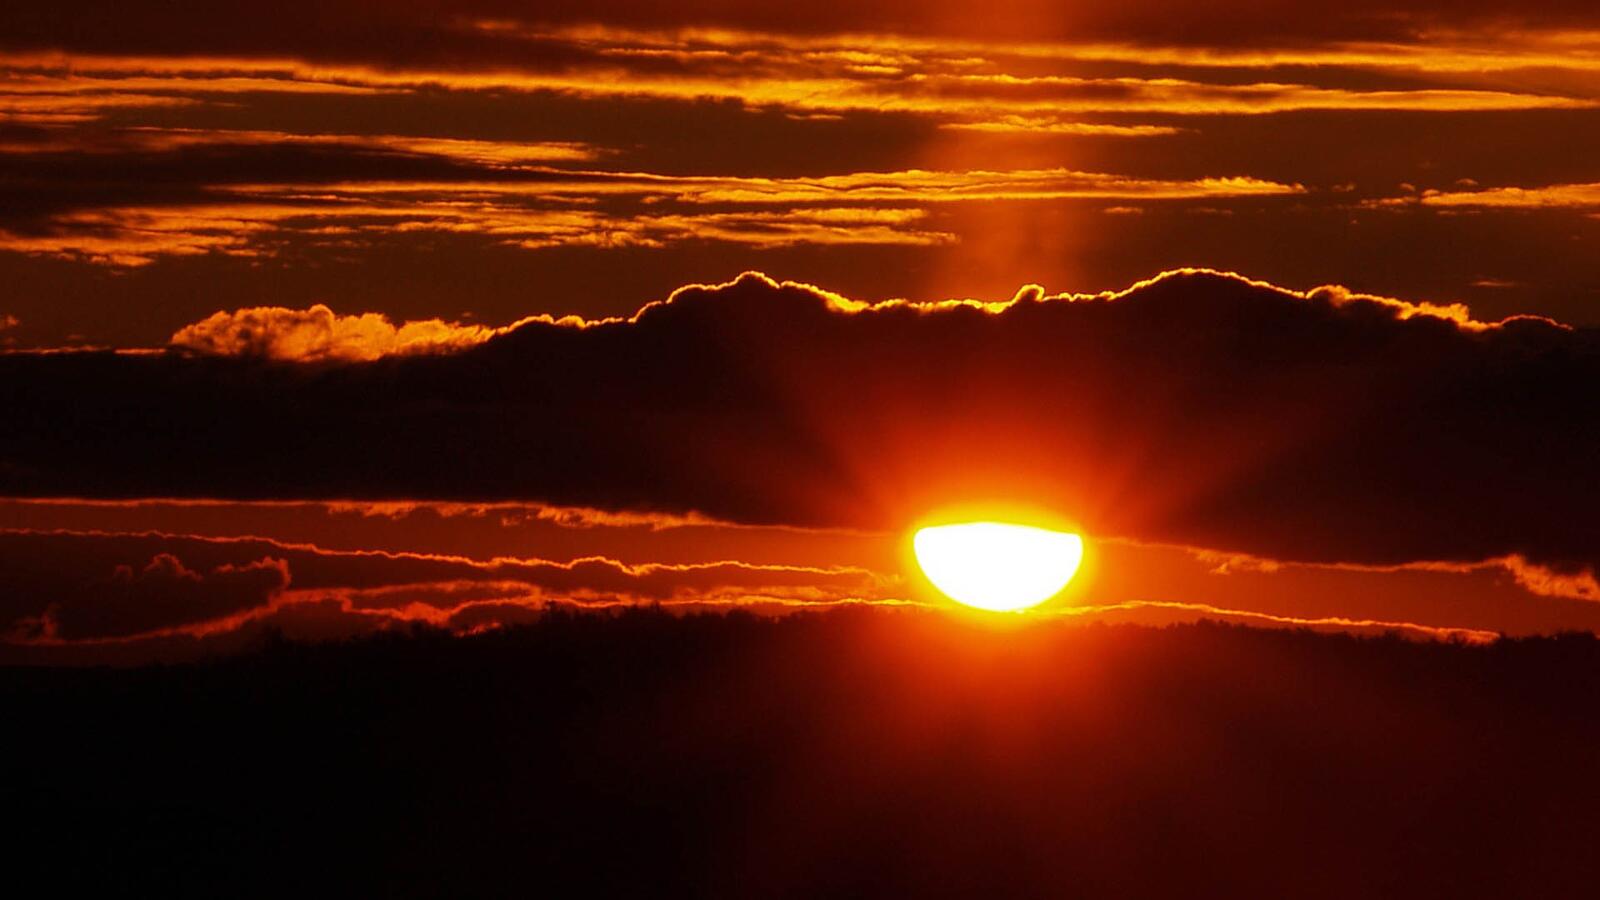 Бесплатное фото Красное солнце в облаках на закате